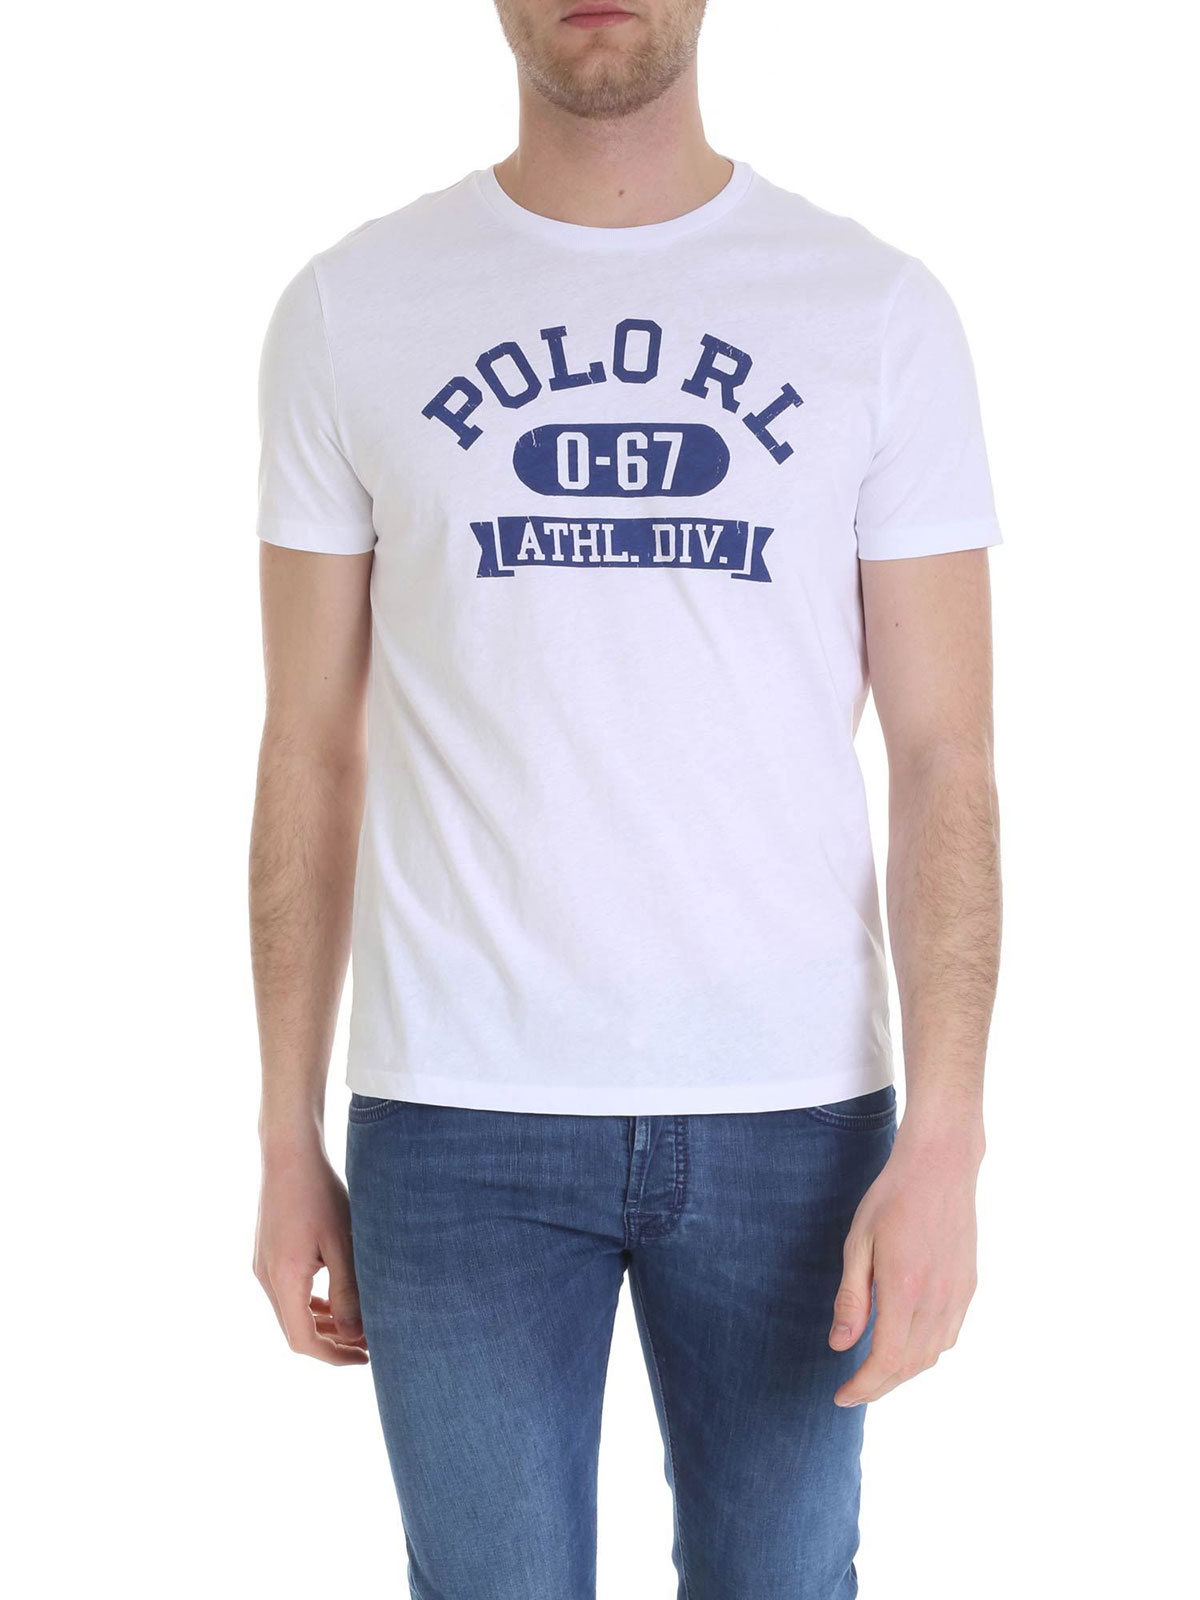 polo ralph lauren athletic shirts